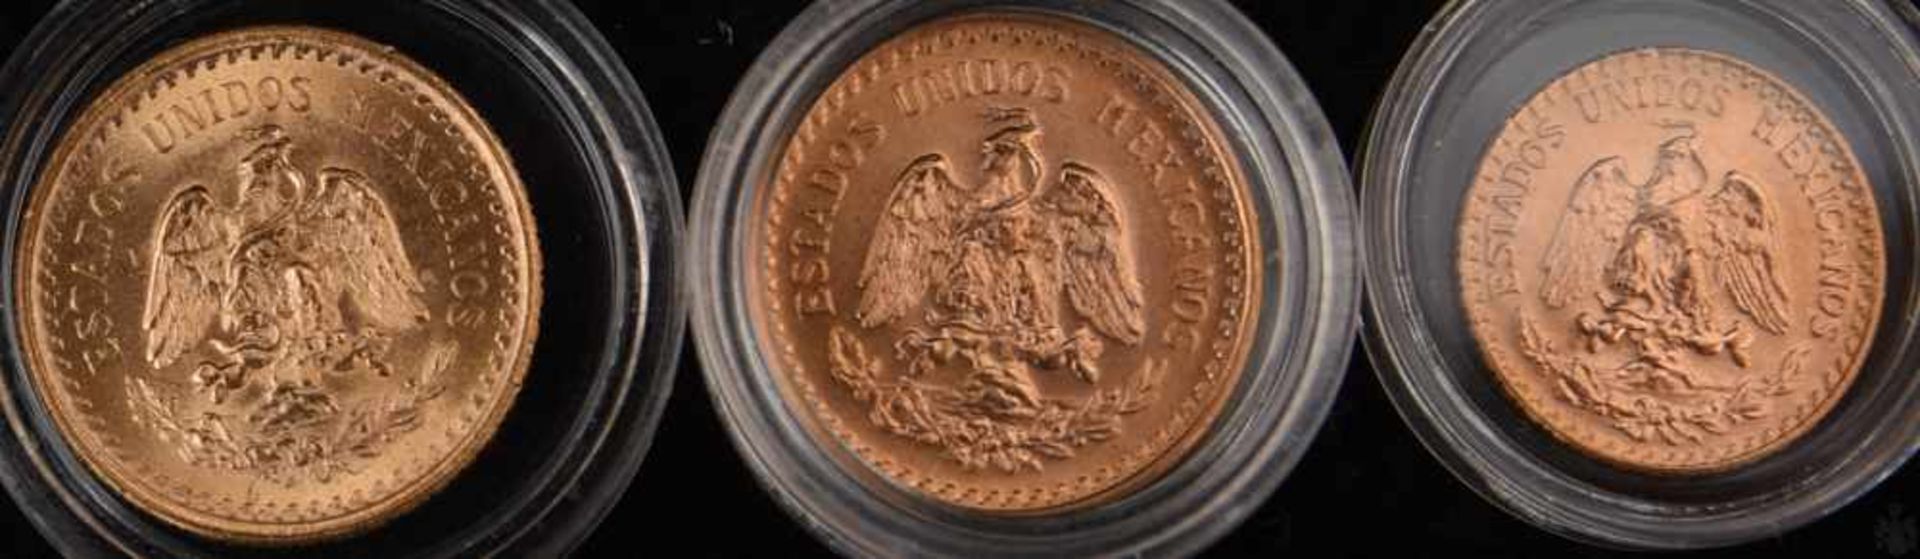 GOLDMÜNZEN, Konvolut Mexico Pesos Gold, 20. Jhd. (11)7 Münzen Mexico1 x 50 Pesos Centenario 41,667 - Bild 9 aus 9